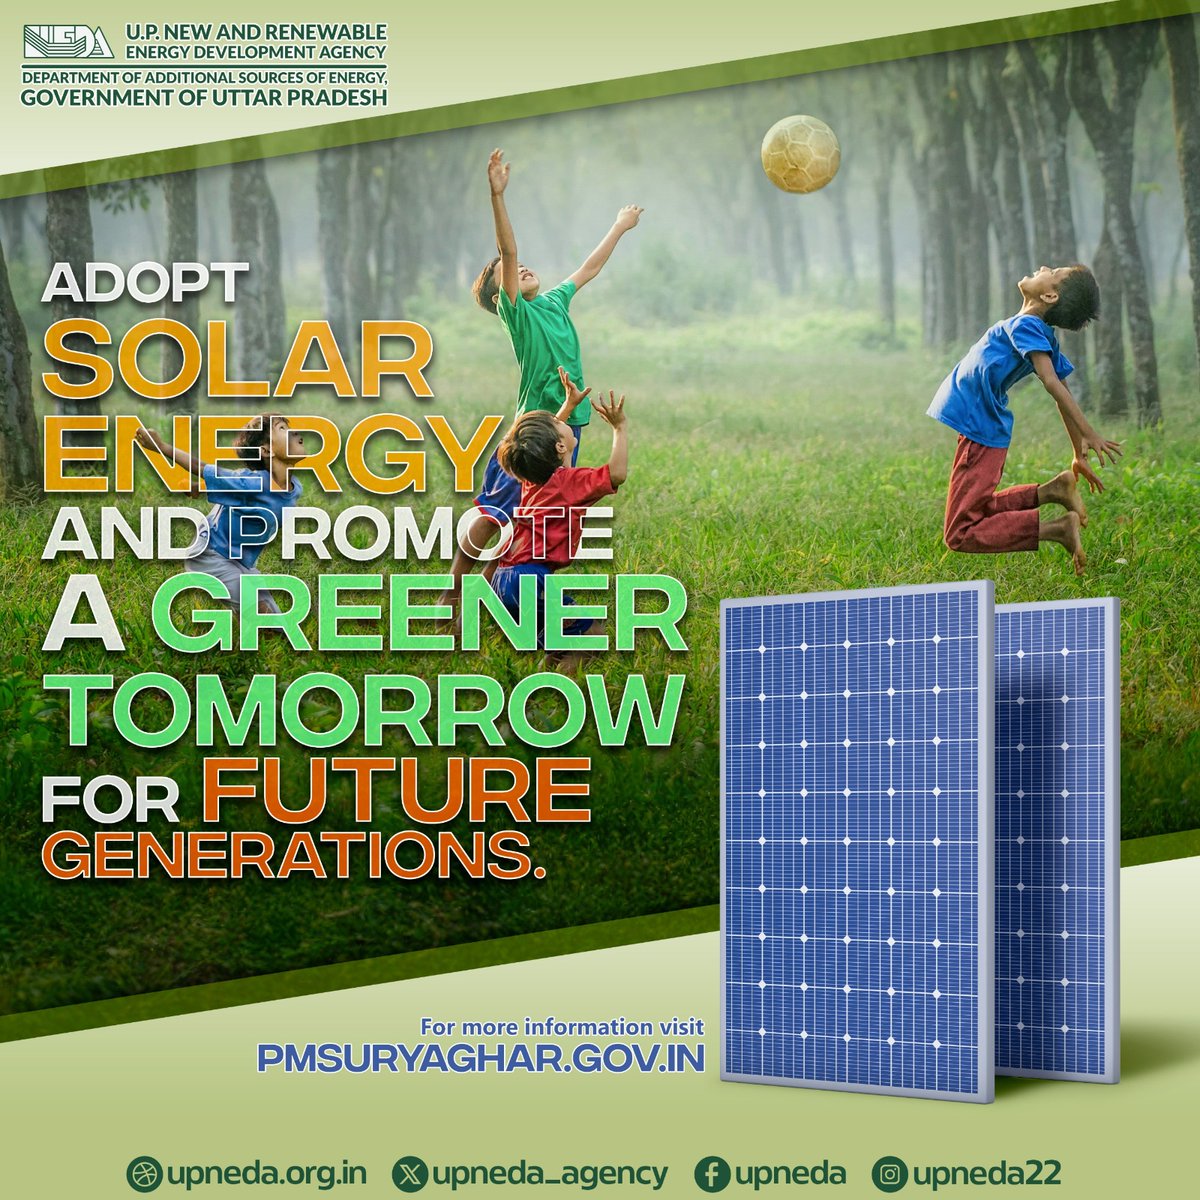 Let's make the earth greener for our new generation to come by opting for Solar energy.

#SolarEnergy #SaveEnergy #CleanEnergy #Upneda #RenewableEnergy #Upneda_Agency
@CMOfficeUP
@aksharmaBharat
@isomendratomar
@ChiefSecyUP
@IASMaheshGupta
@MinOfPower
@UppclChairman…